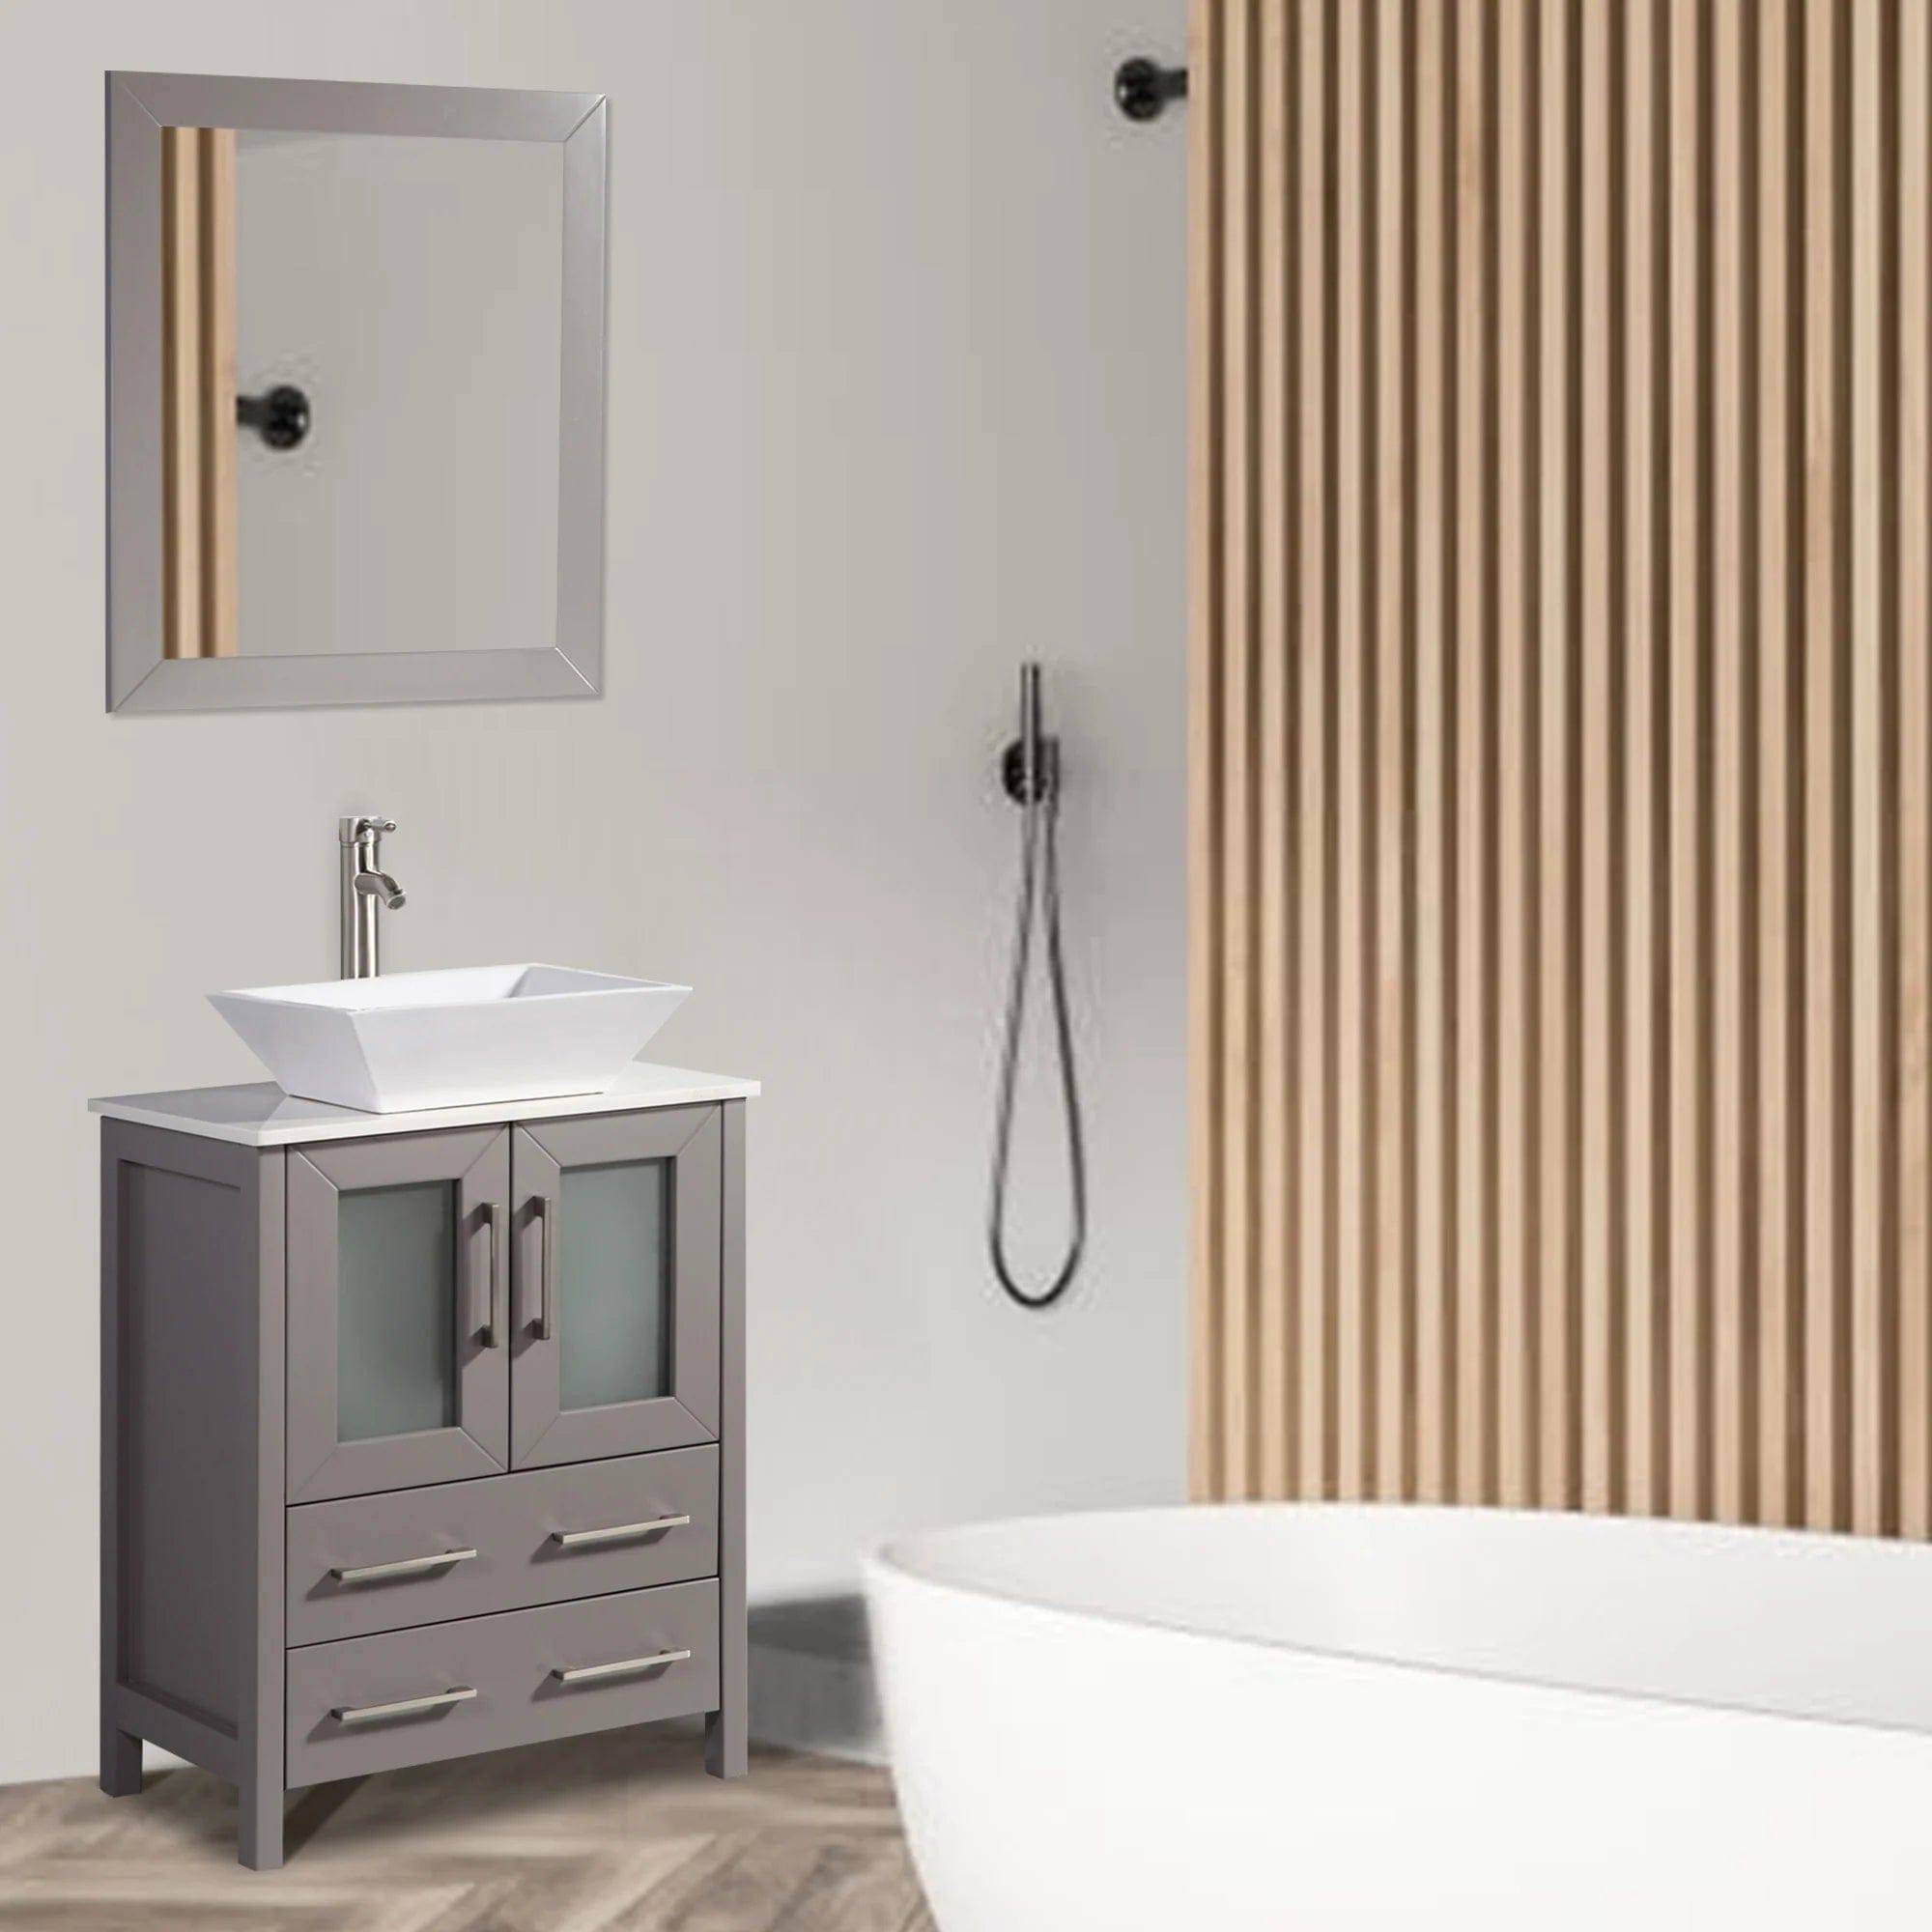 24 in. Single Sink Bathroom Vanity Combo Set in Gray - Decohub Home